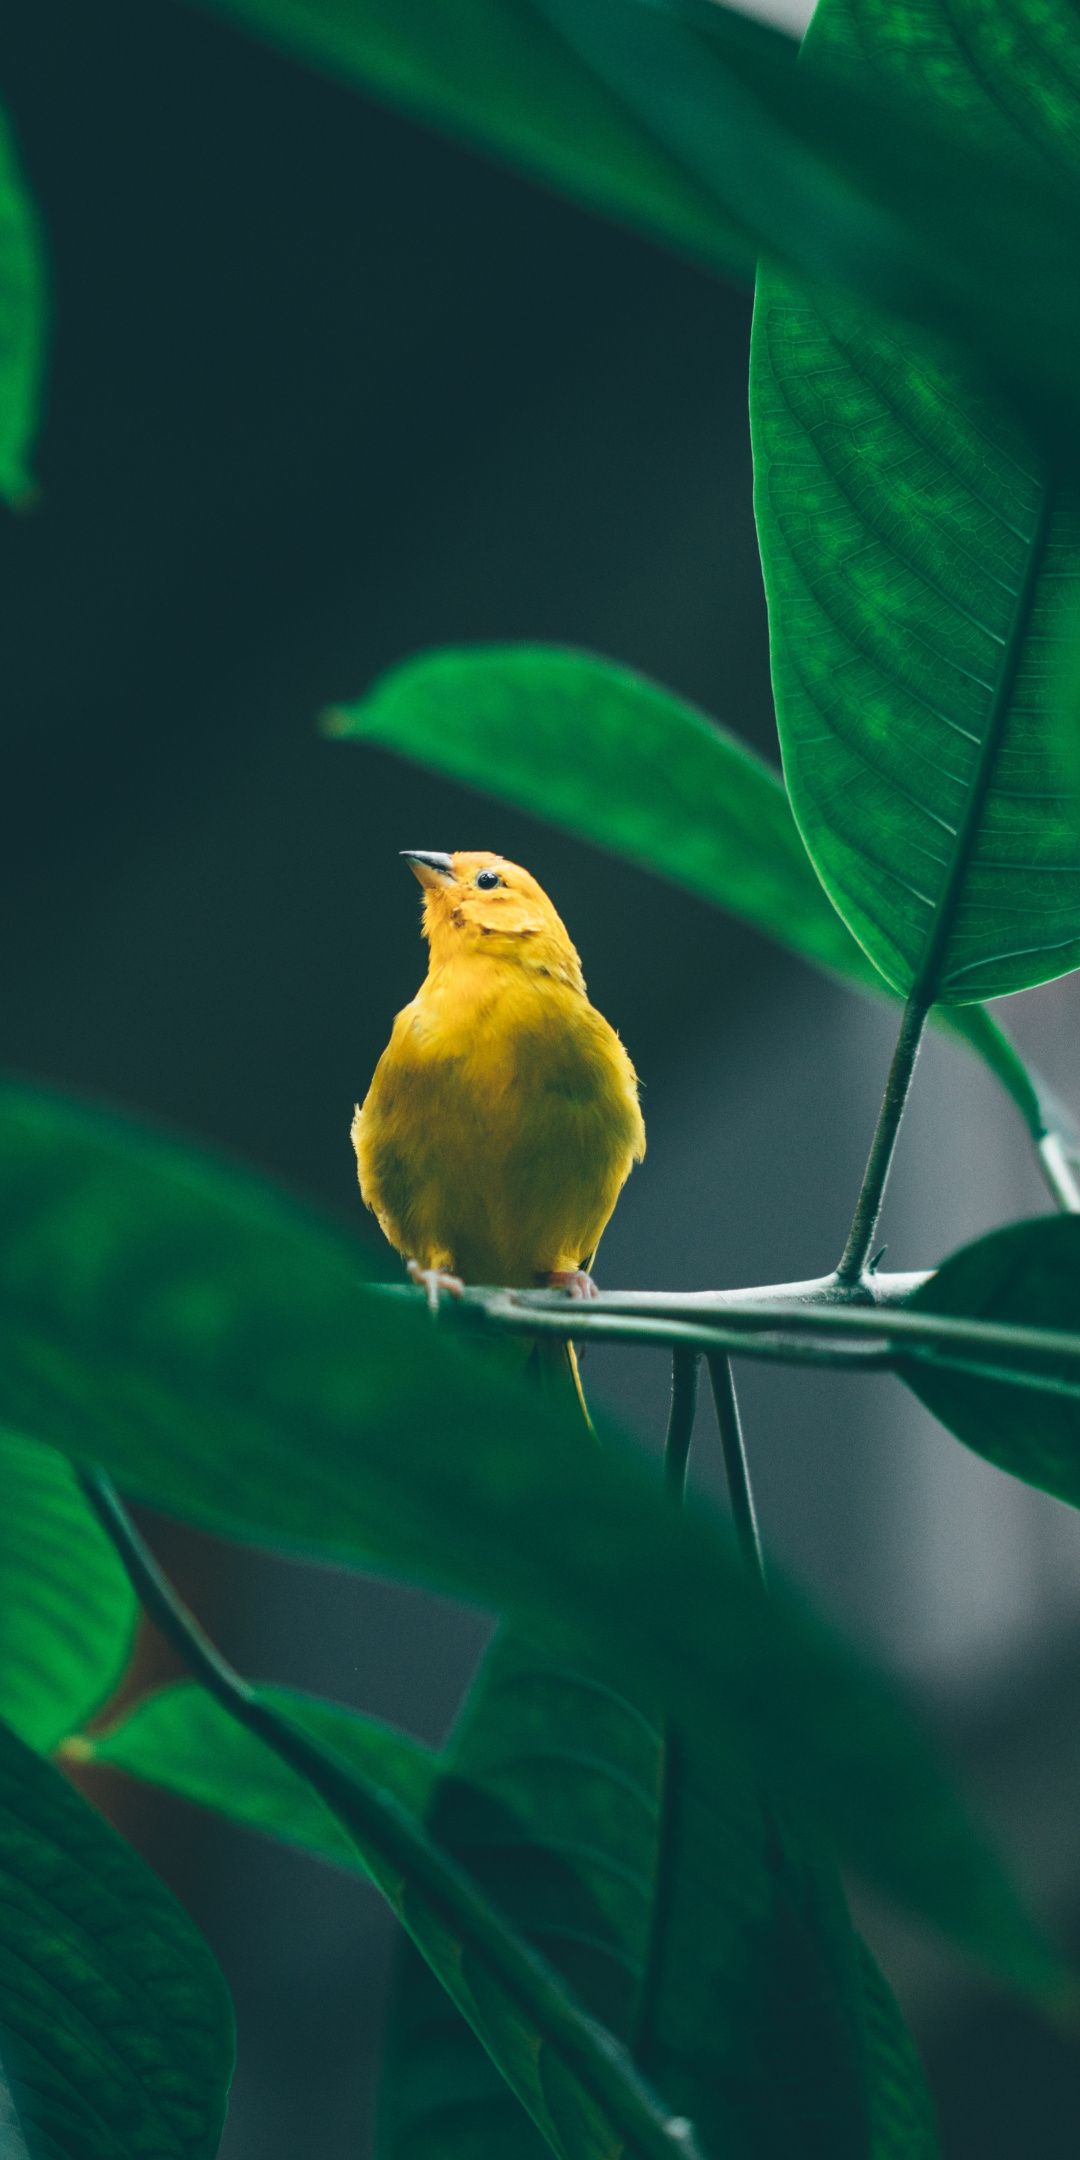 Small, cute, yellow bird, tree branch, 1080x2160 wallpaper. Birds wallpaper hd, Bird wallpaper, Nature photography